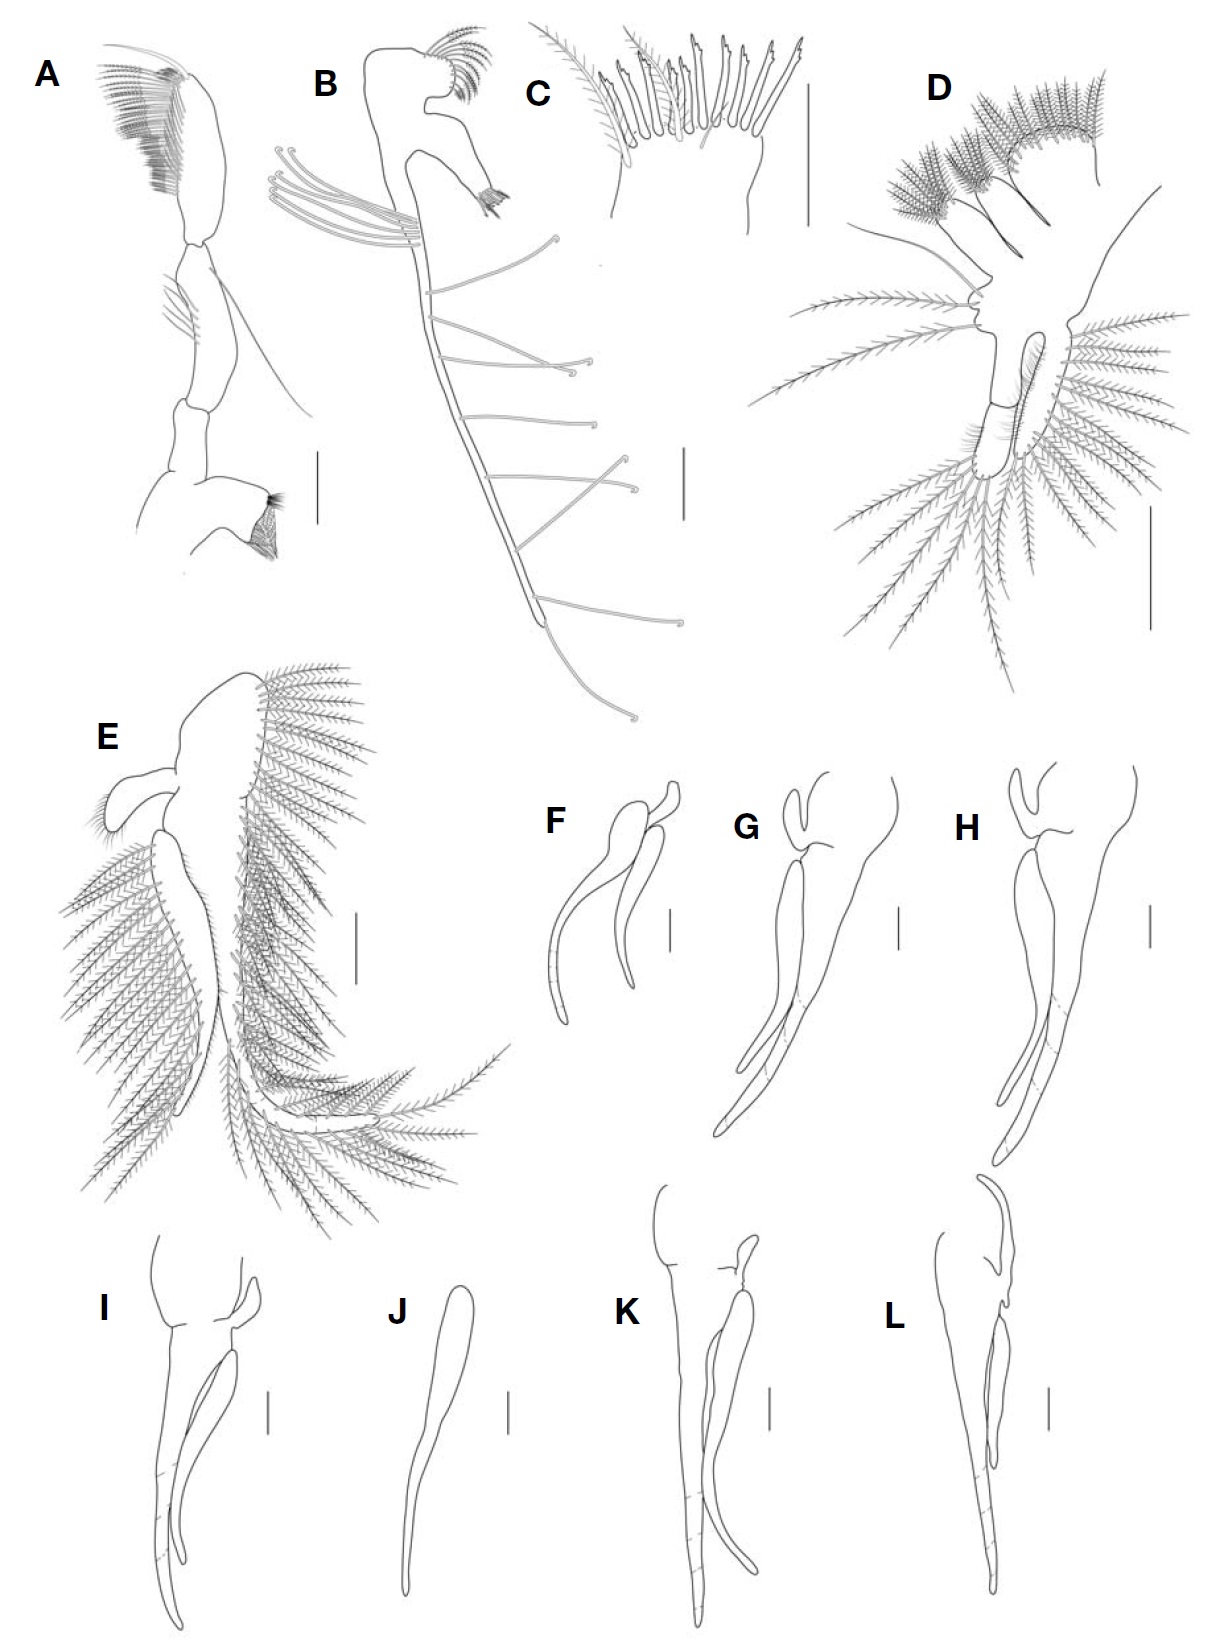 Paranebalia longipes, female. A, Mandibular palp; B, First maxilla; C, First maxilla, distal endite; D, Second maxilla; E, Thoracopod 1, showing setation; F, Thoracopod 2; G, Thoracopod 3; H, Thoracopod 4; I, Thoracopod 5; J, Thoracopod 6; K, Thoracopod 7; L, Thoracopod 8. Scale bars: A, B, D-L=0.2 mm, C=0.1 mm.